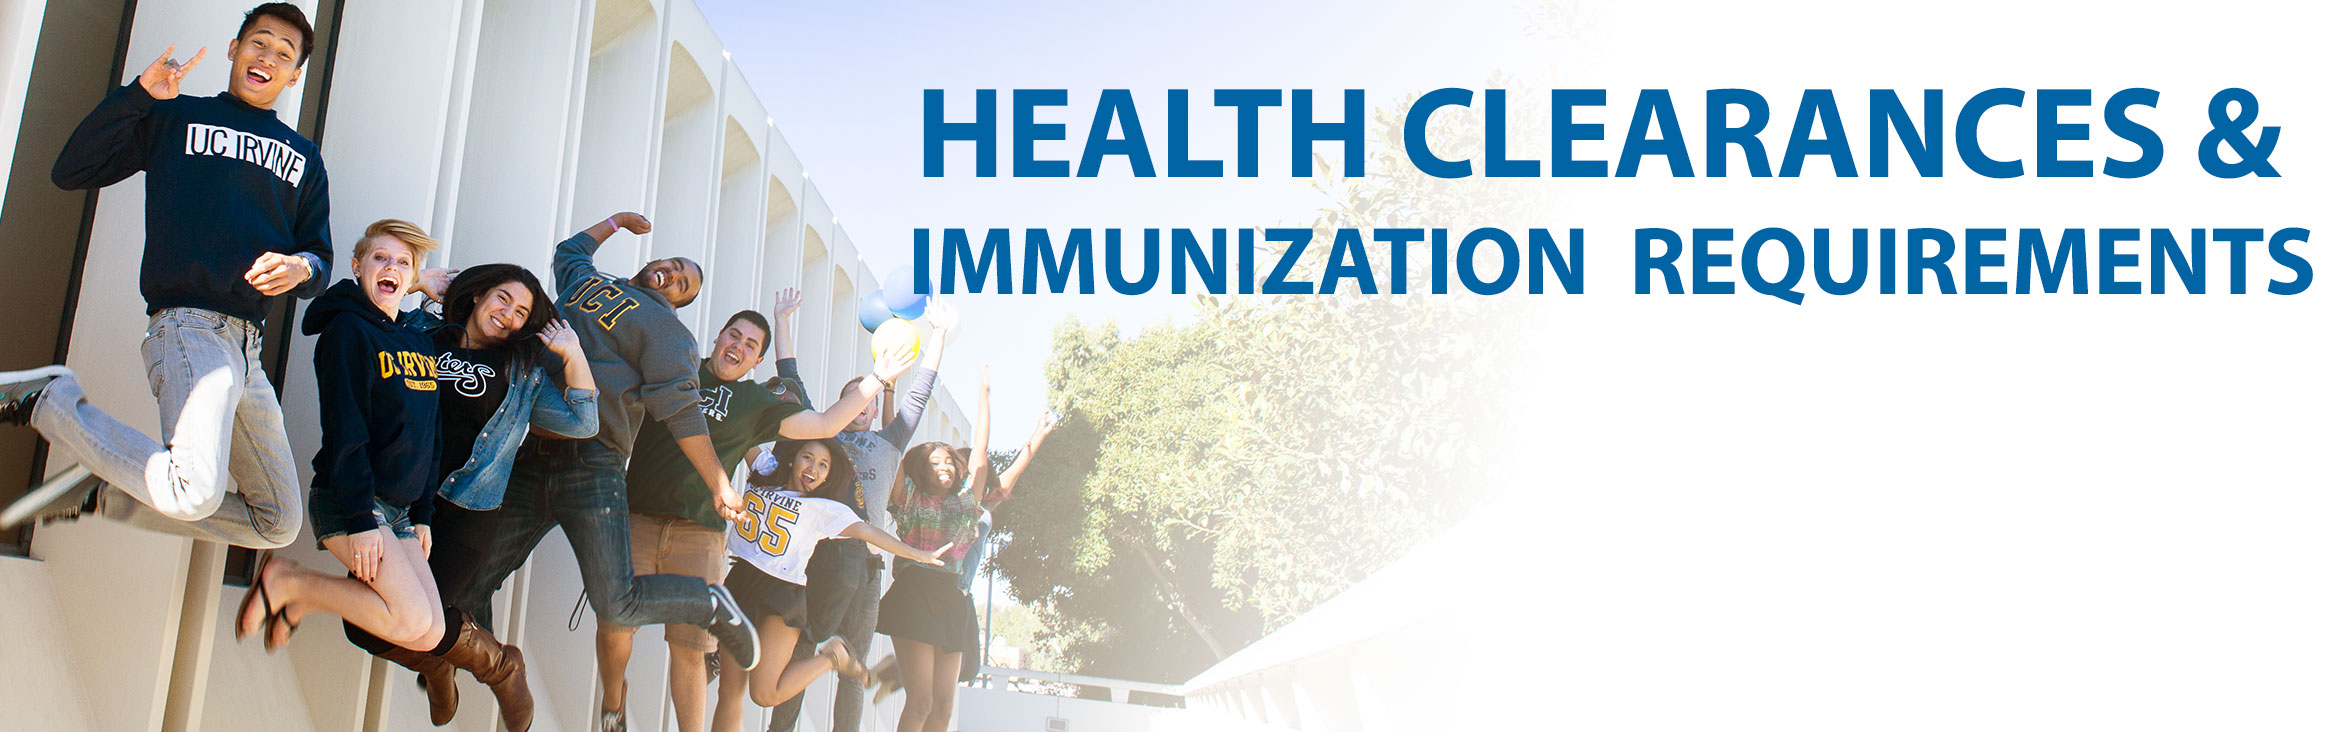 Health Clearance & Immunization Requirements